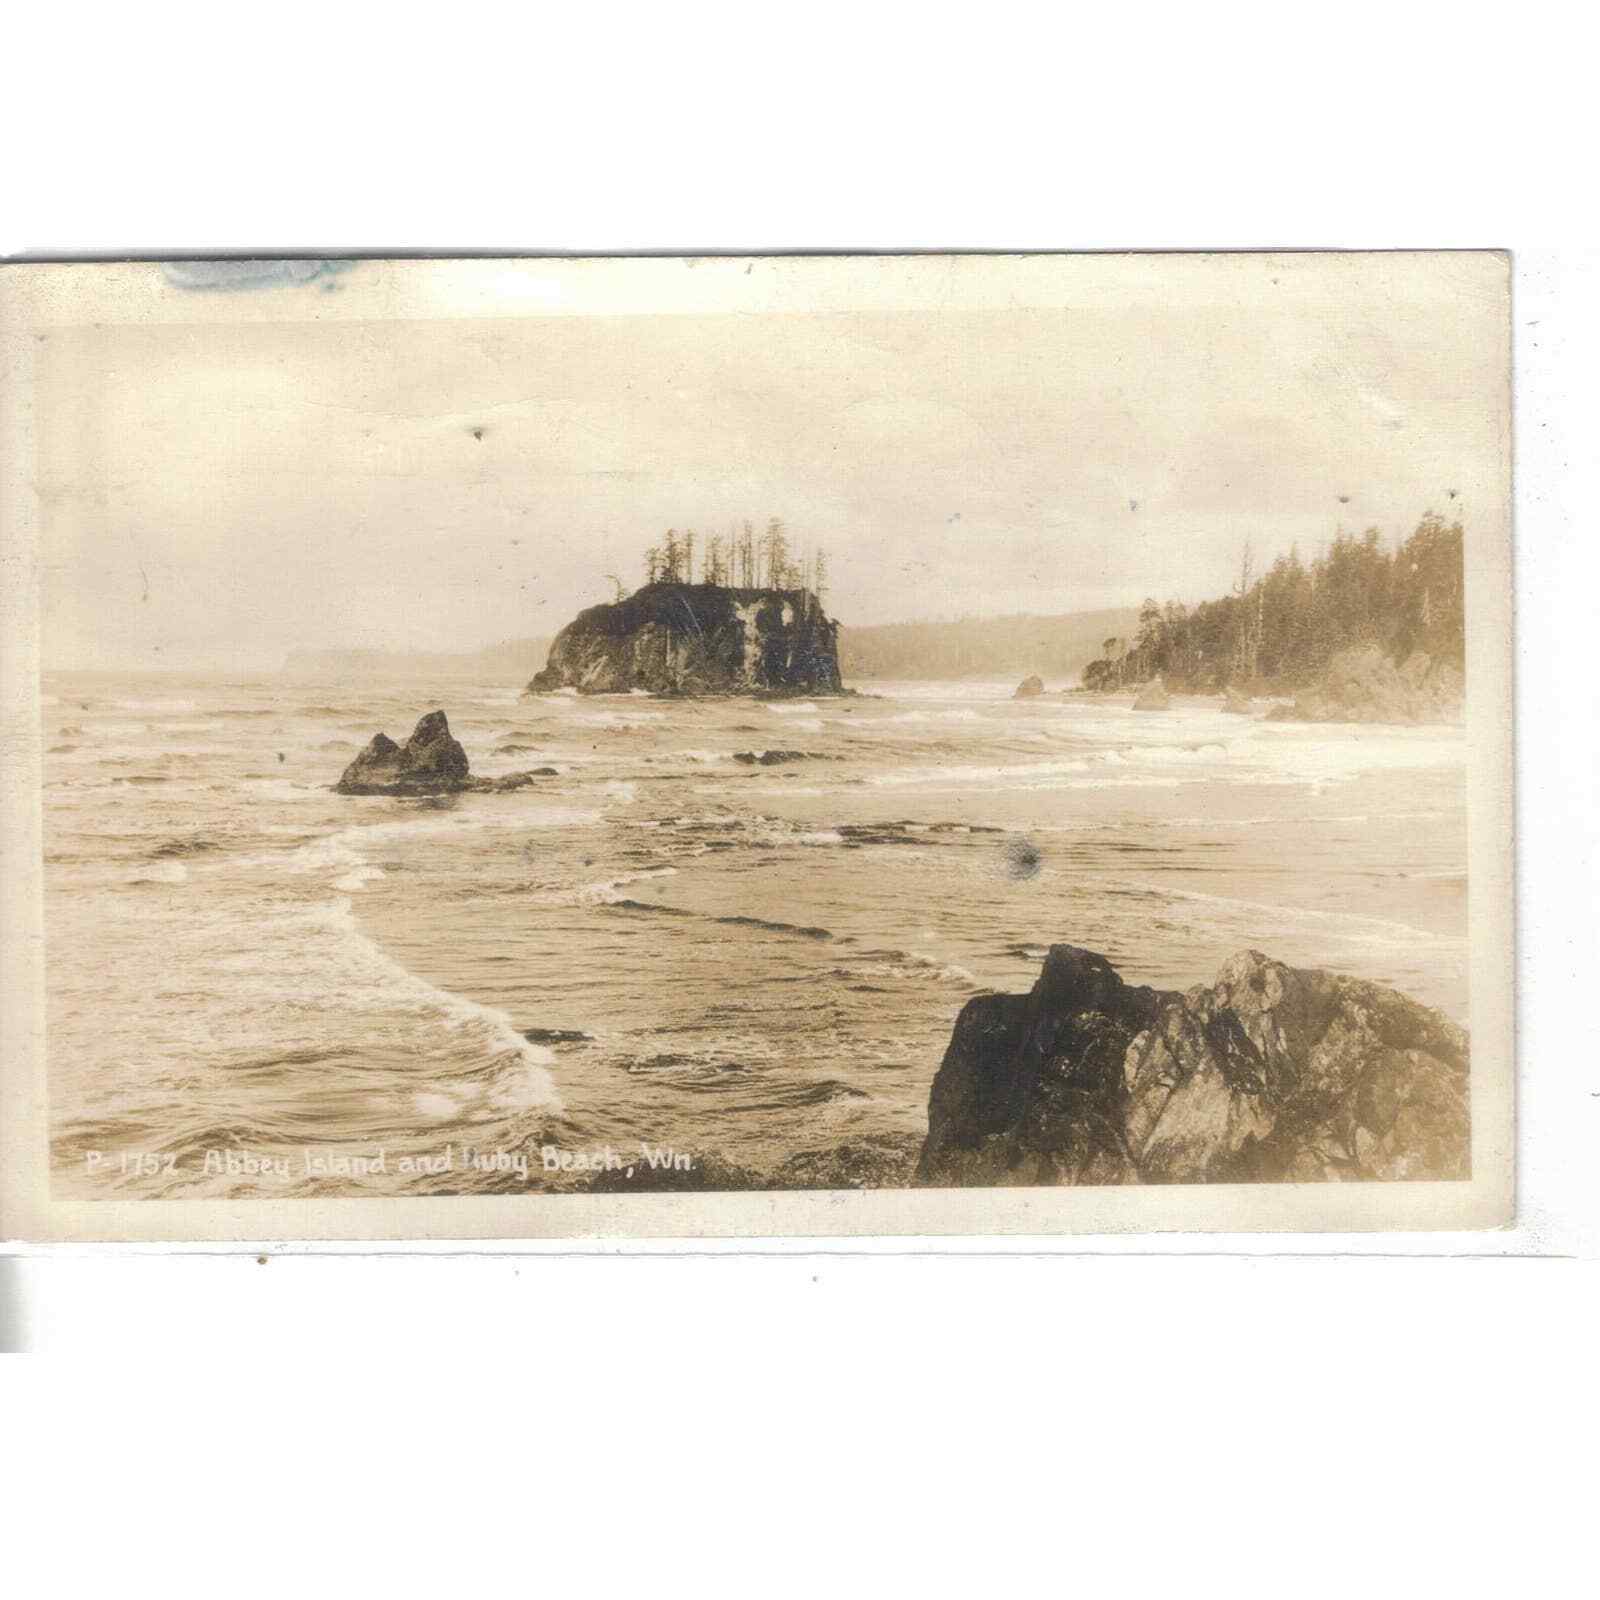 RPPC-Abbey Island and Ruby Beach-Washington 1945